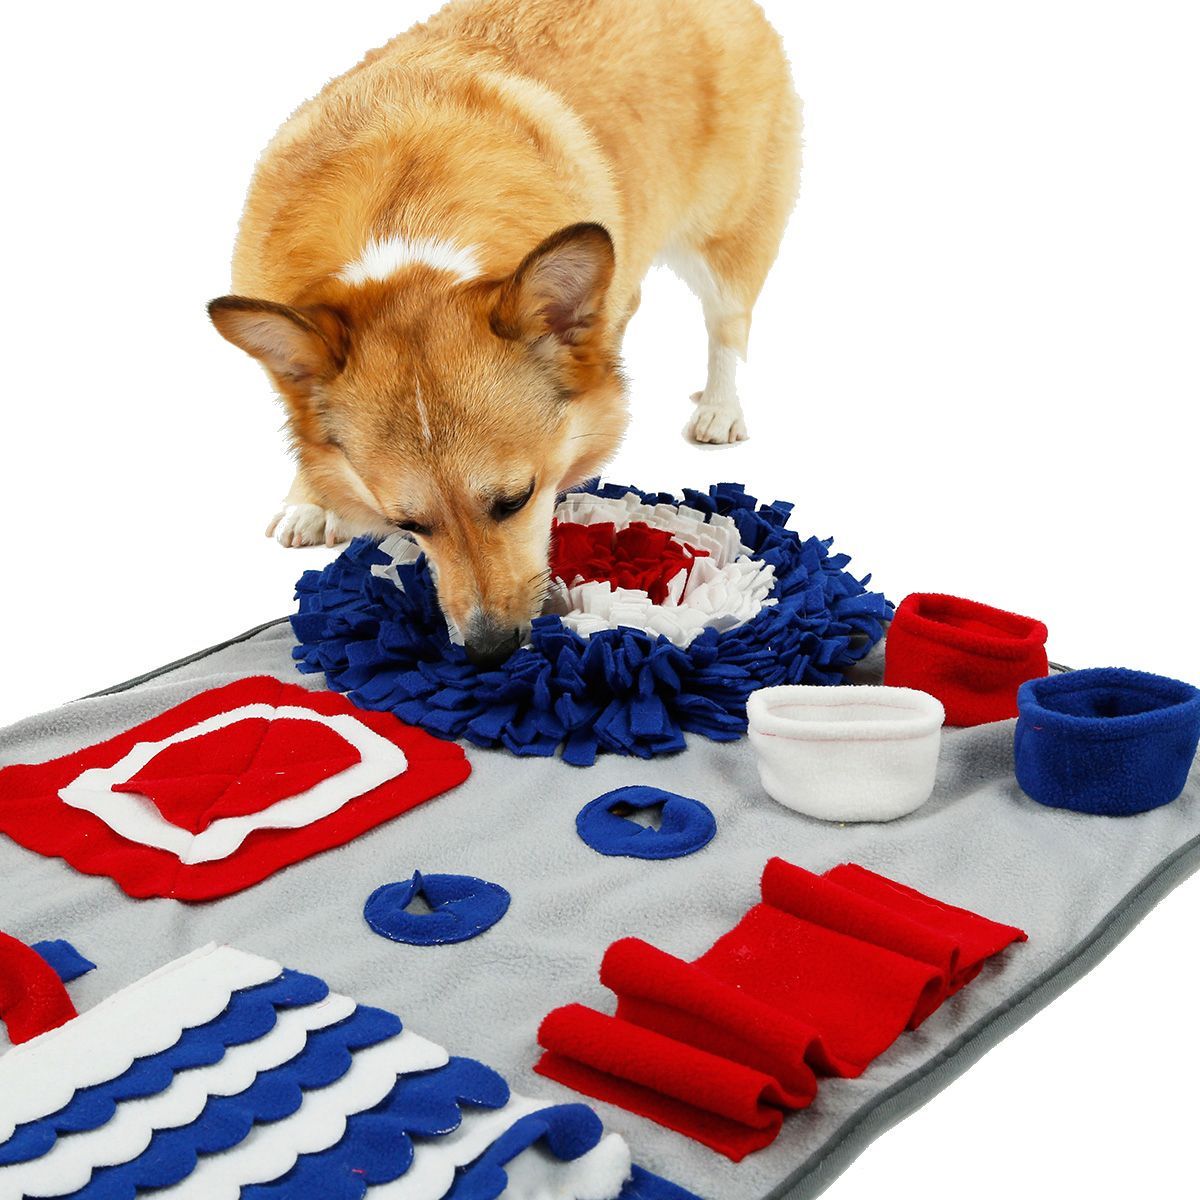 Dog Sniffing Pad Toys Large Dog Training Pad Non Slip Pet